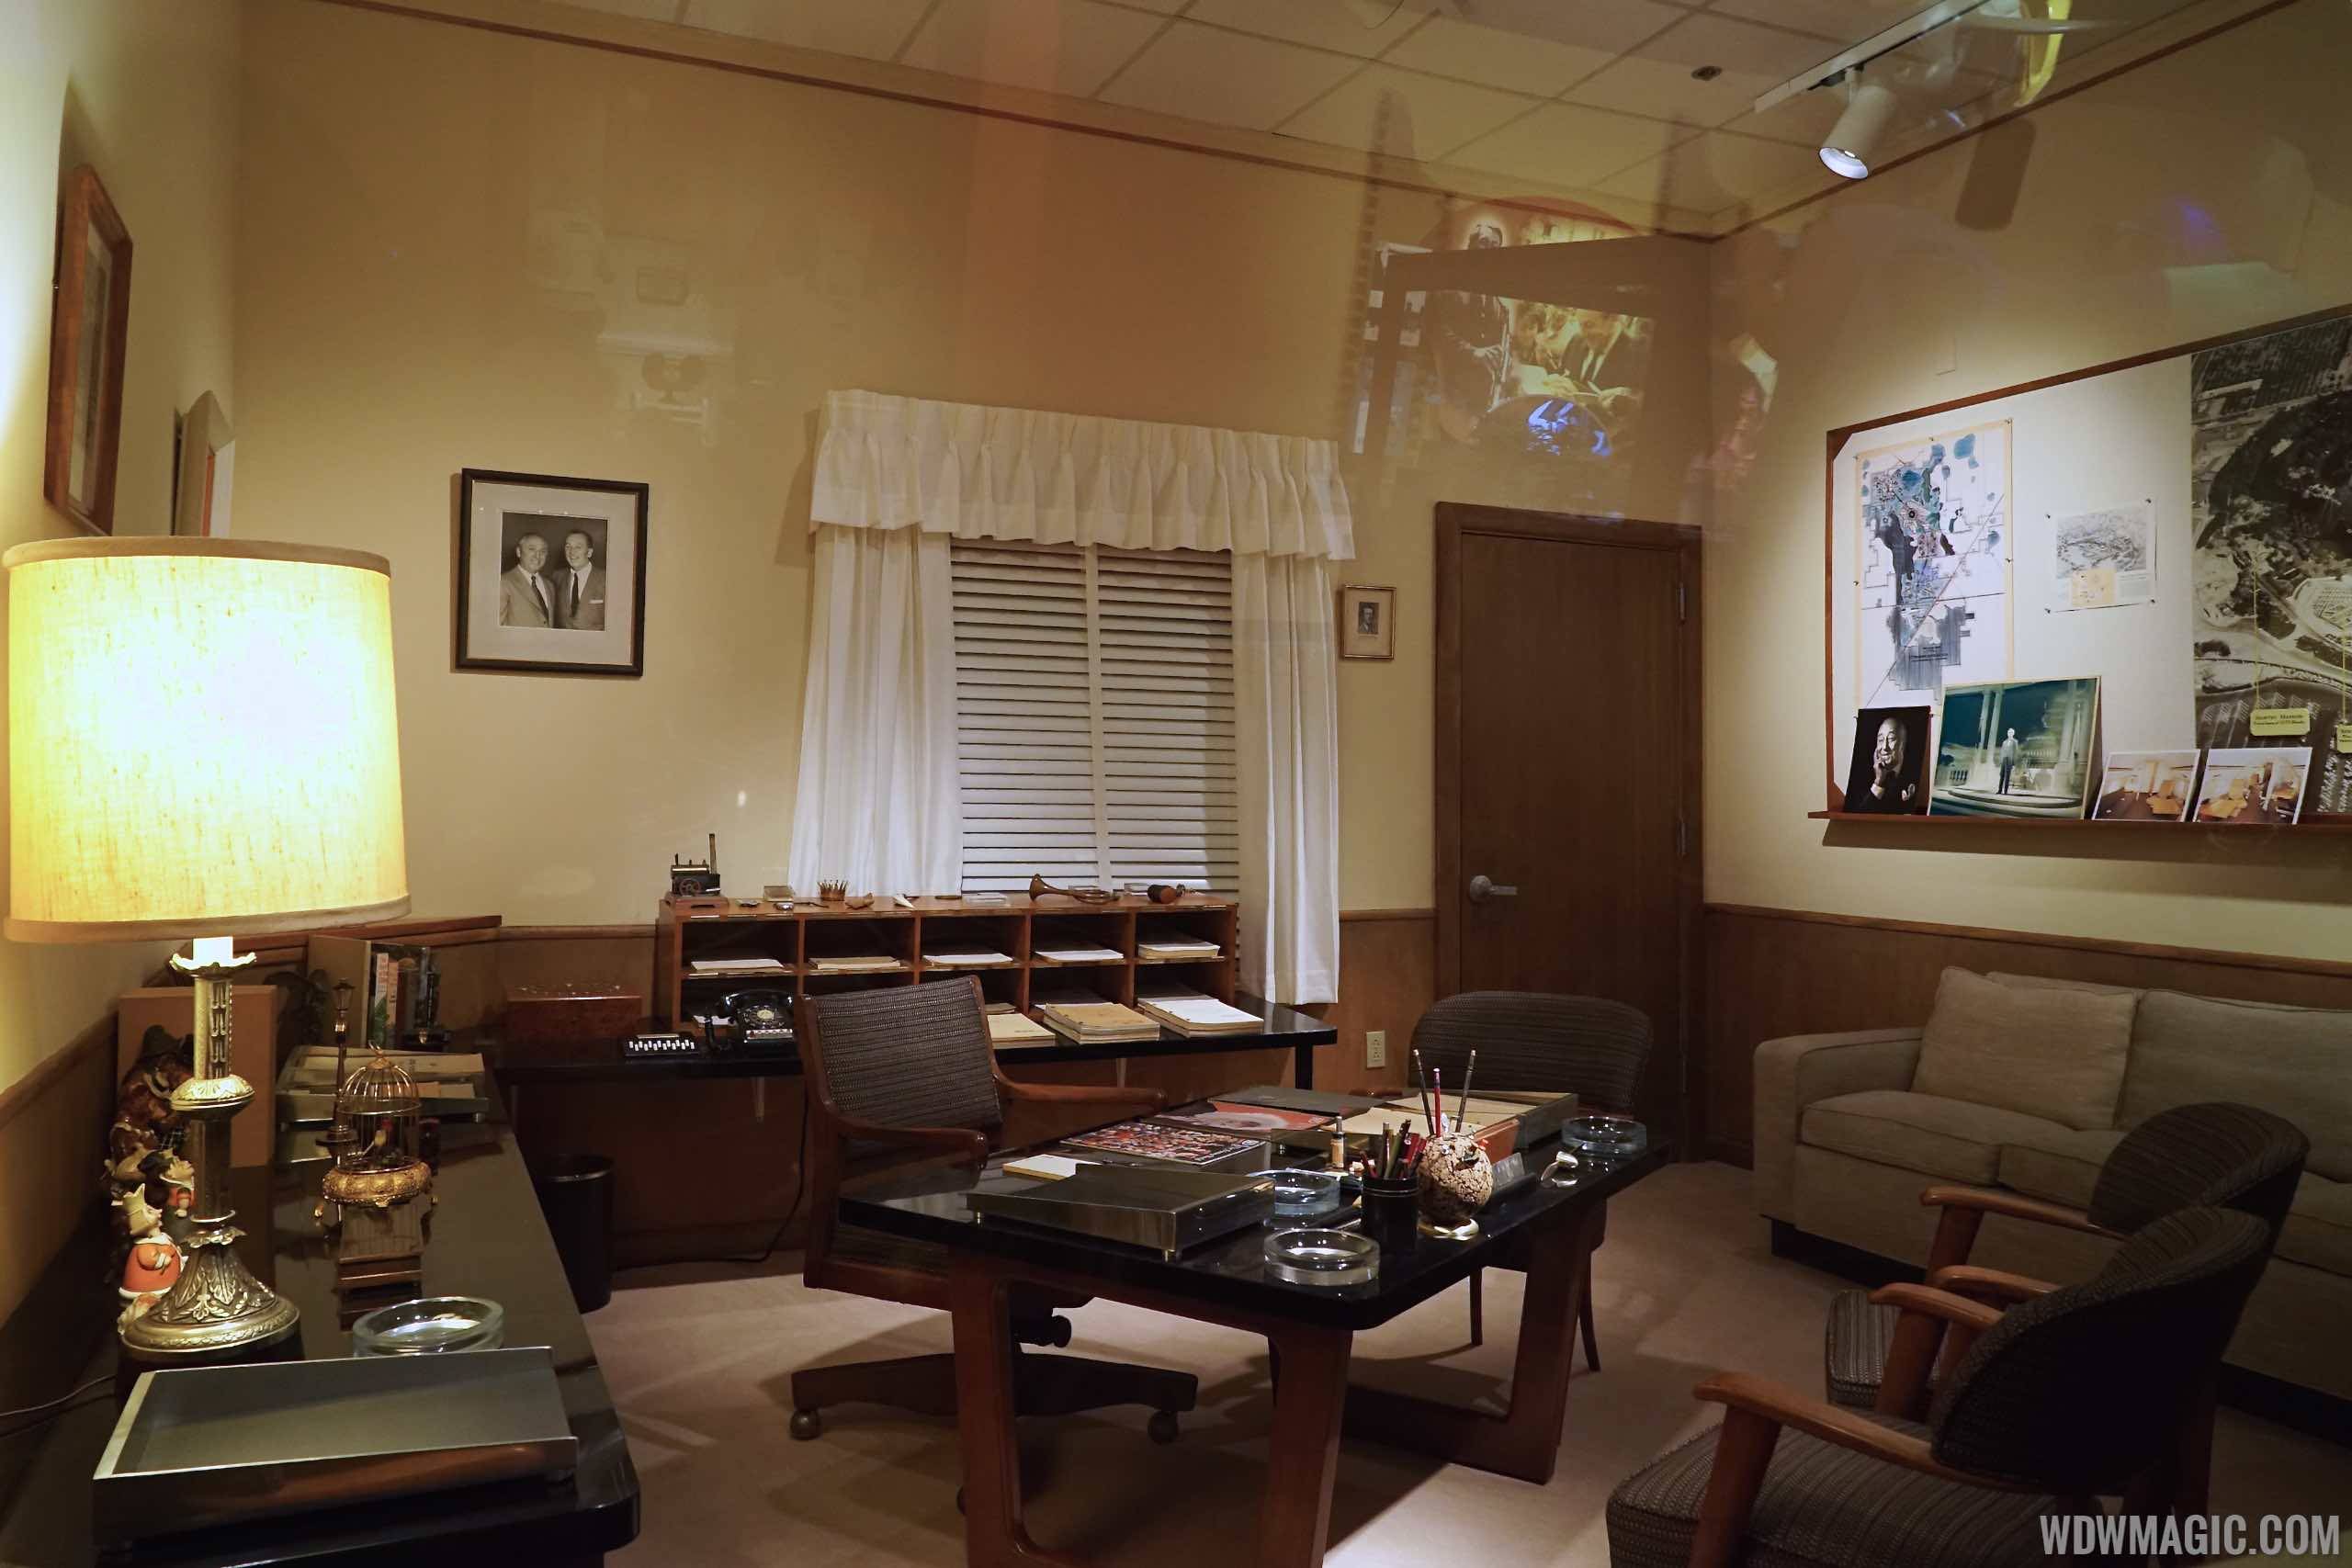 One Man's Dream - Walt Disney's office